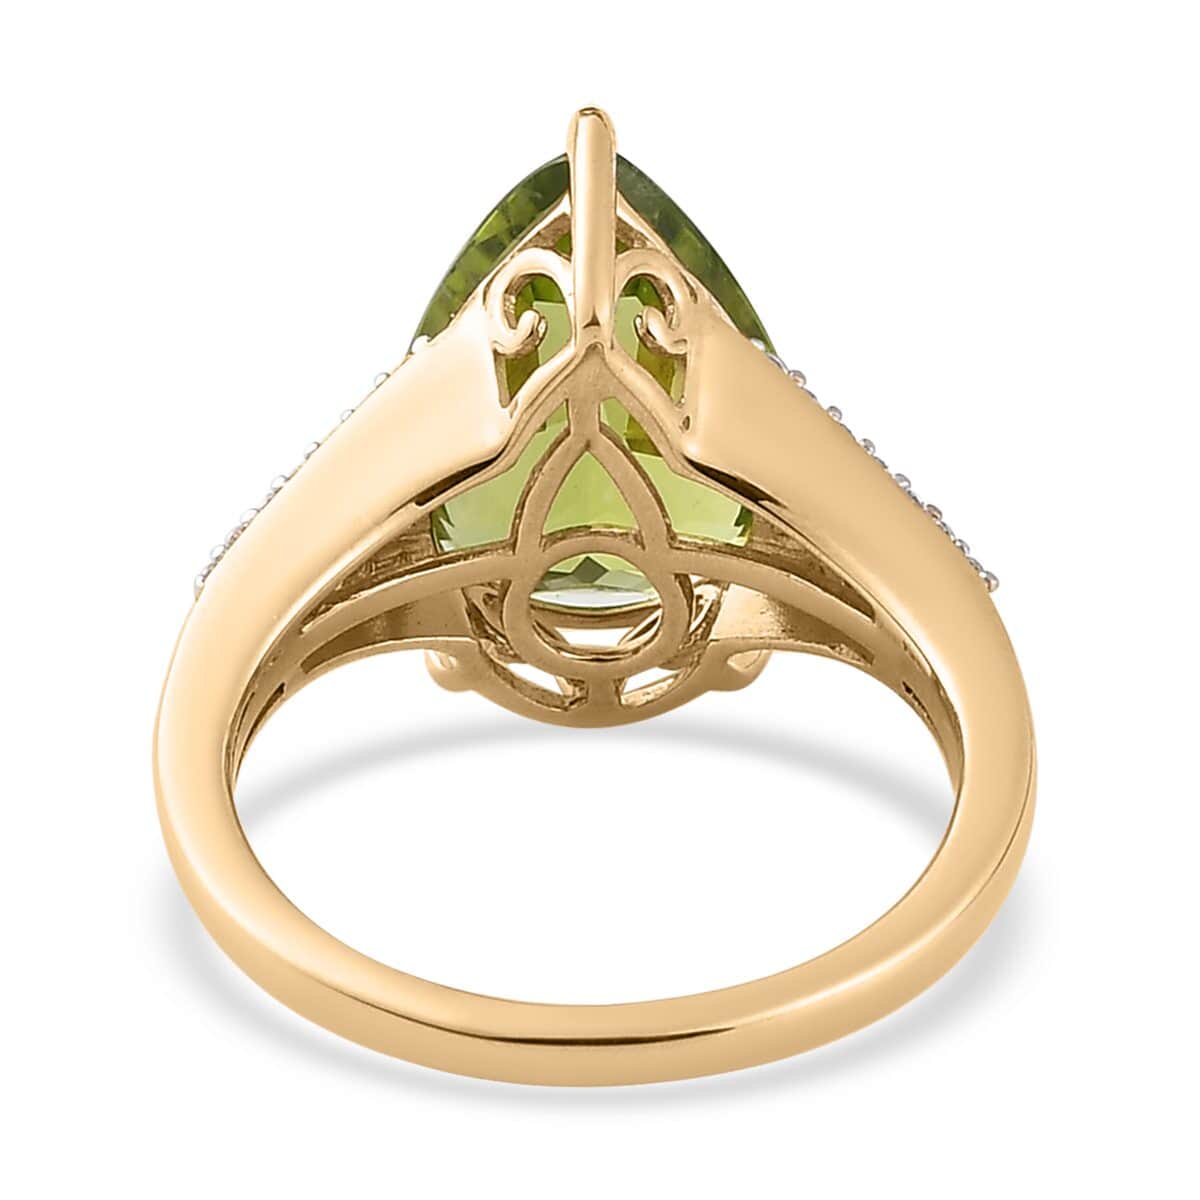 Luxoro 10K Yellow Gold Premium Peridot and Moissanite Ring (Size 7.0) 3.25 Grams 5.00 ctw image number 4